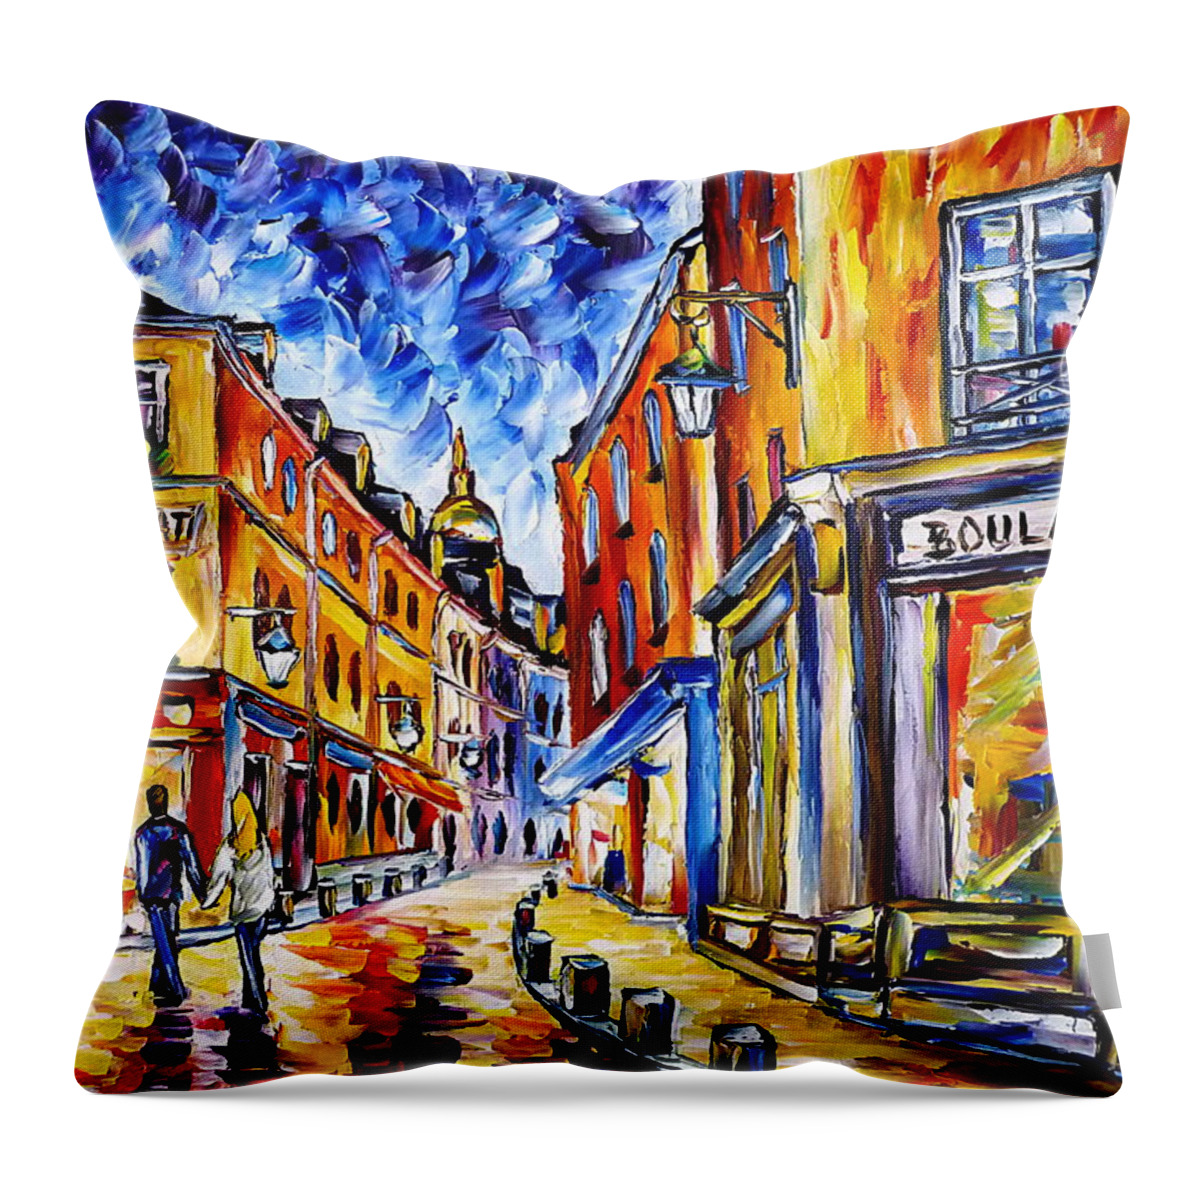 I Love Paris Throw Pillow featuring the painting Le Consulat, Montmartre by Mirek Kuzniar